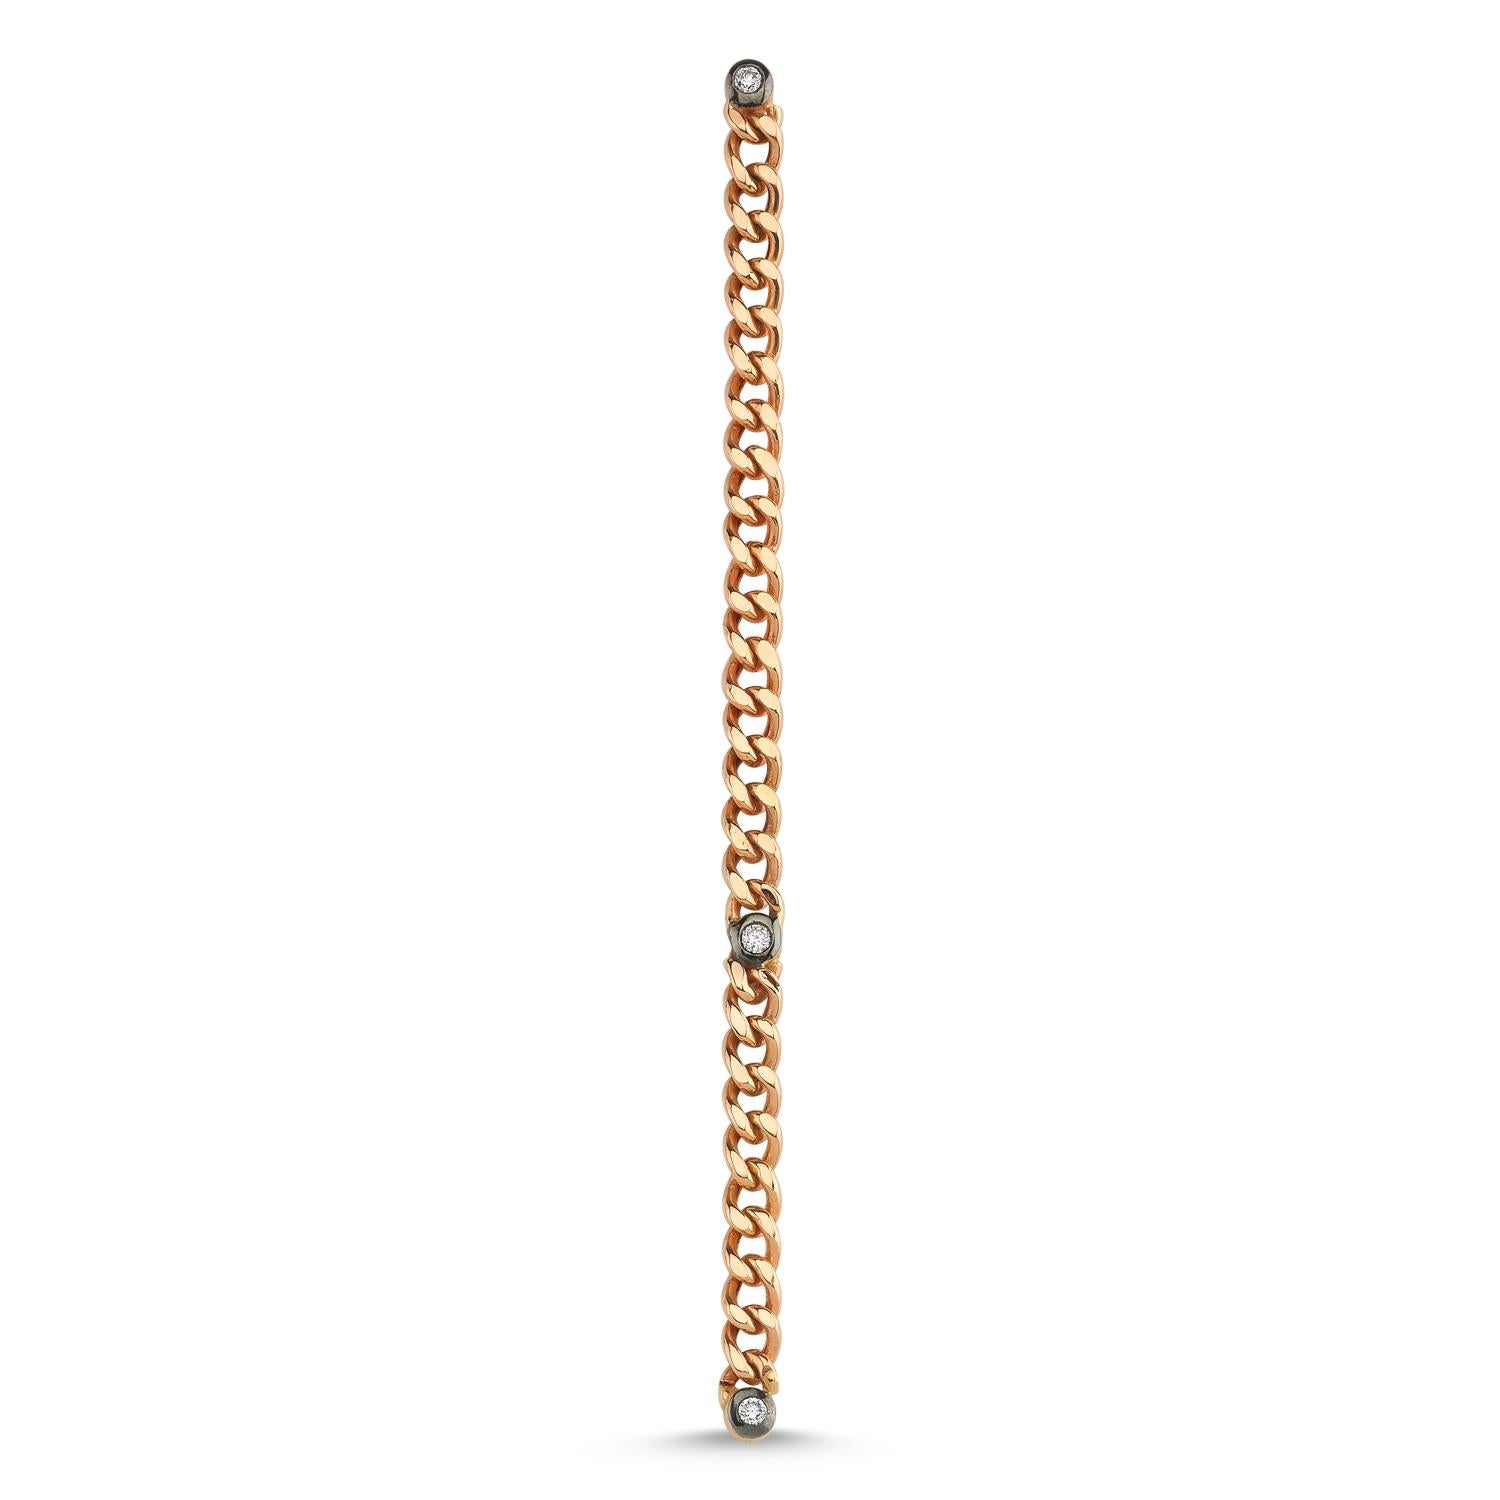 Retro 14k rose gold chain earring with three diamond (single) by Selda Jewellery

Additional Information:-
Collection: Waves Collection
14k Rose gold
0.18ct White diamond
Length 8.5cm